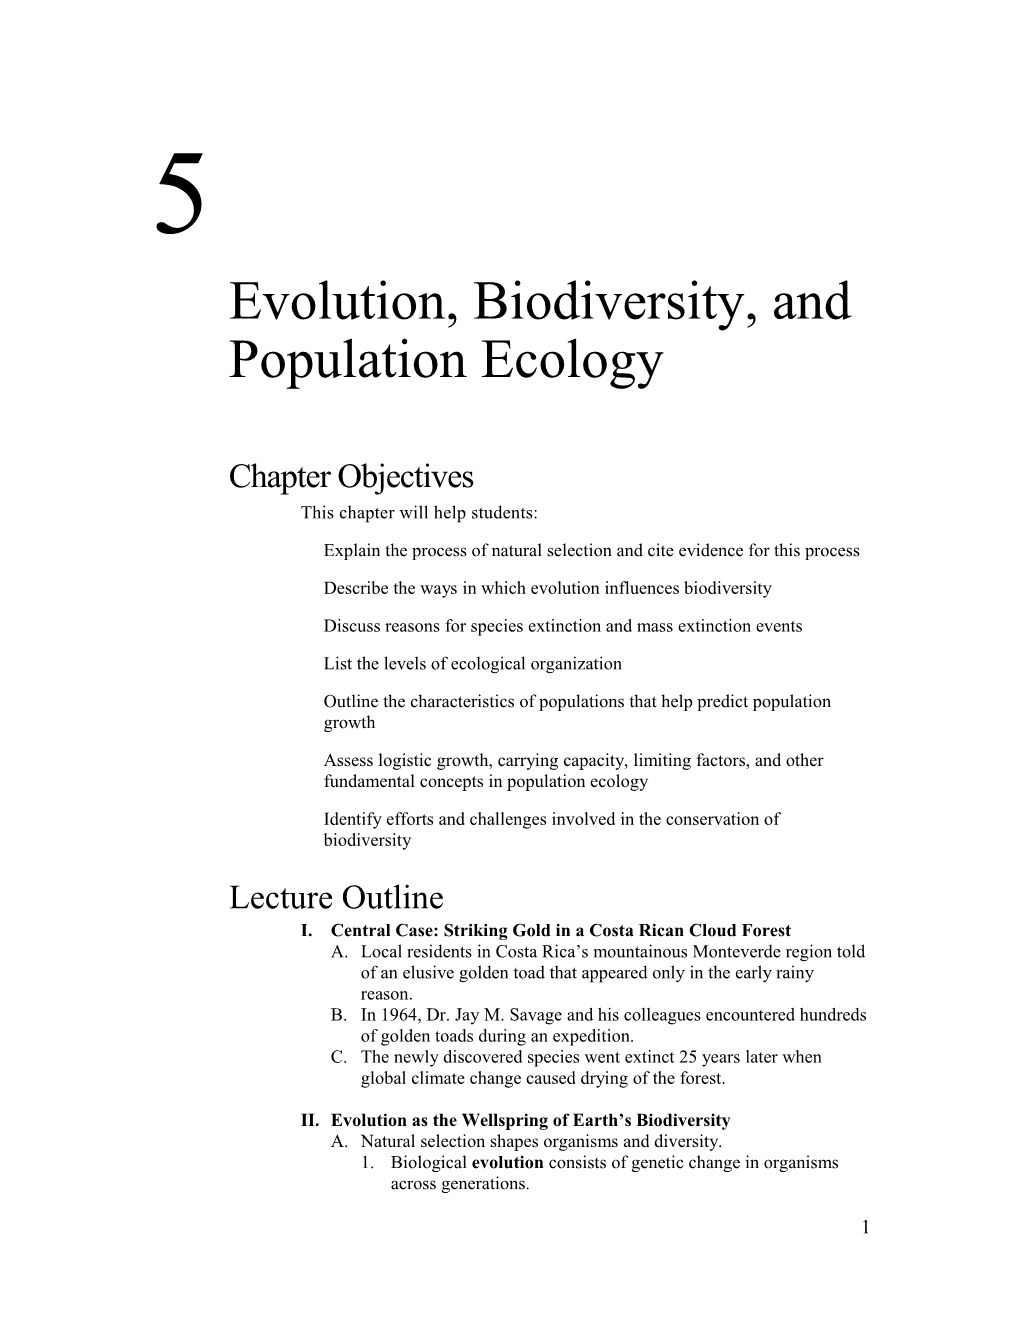 Evolution, Biodiversity, and Population Ecology